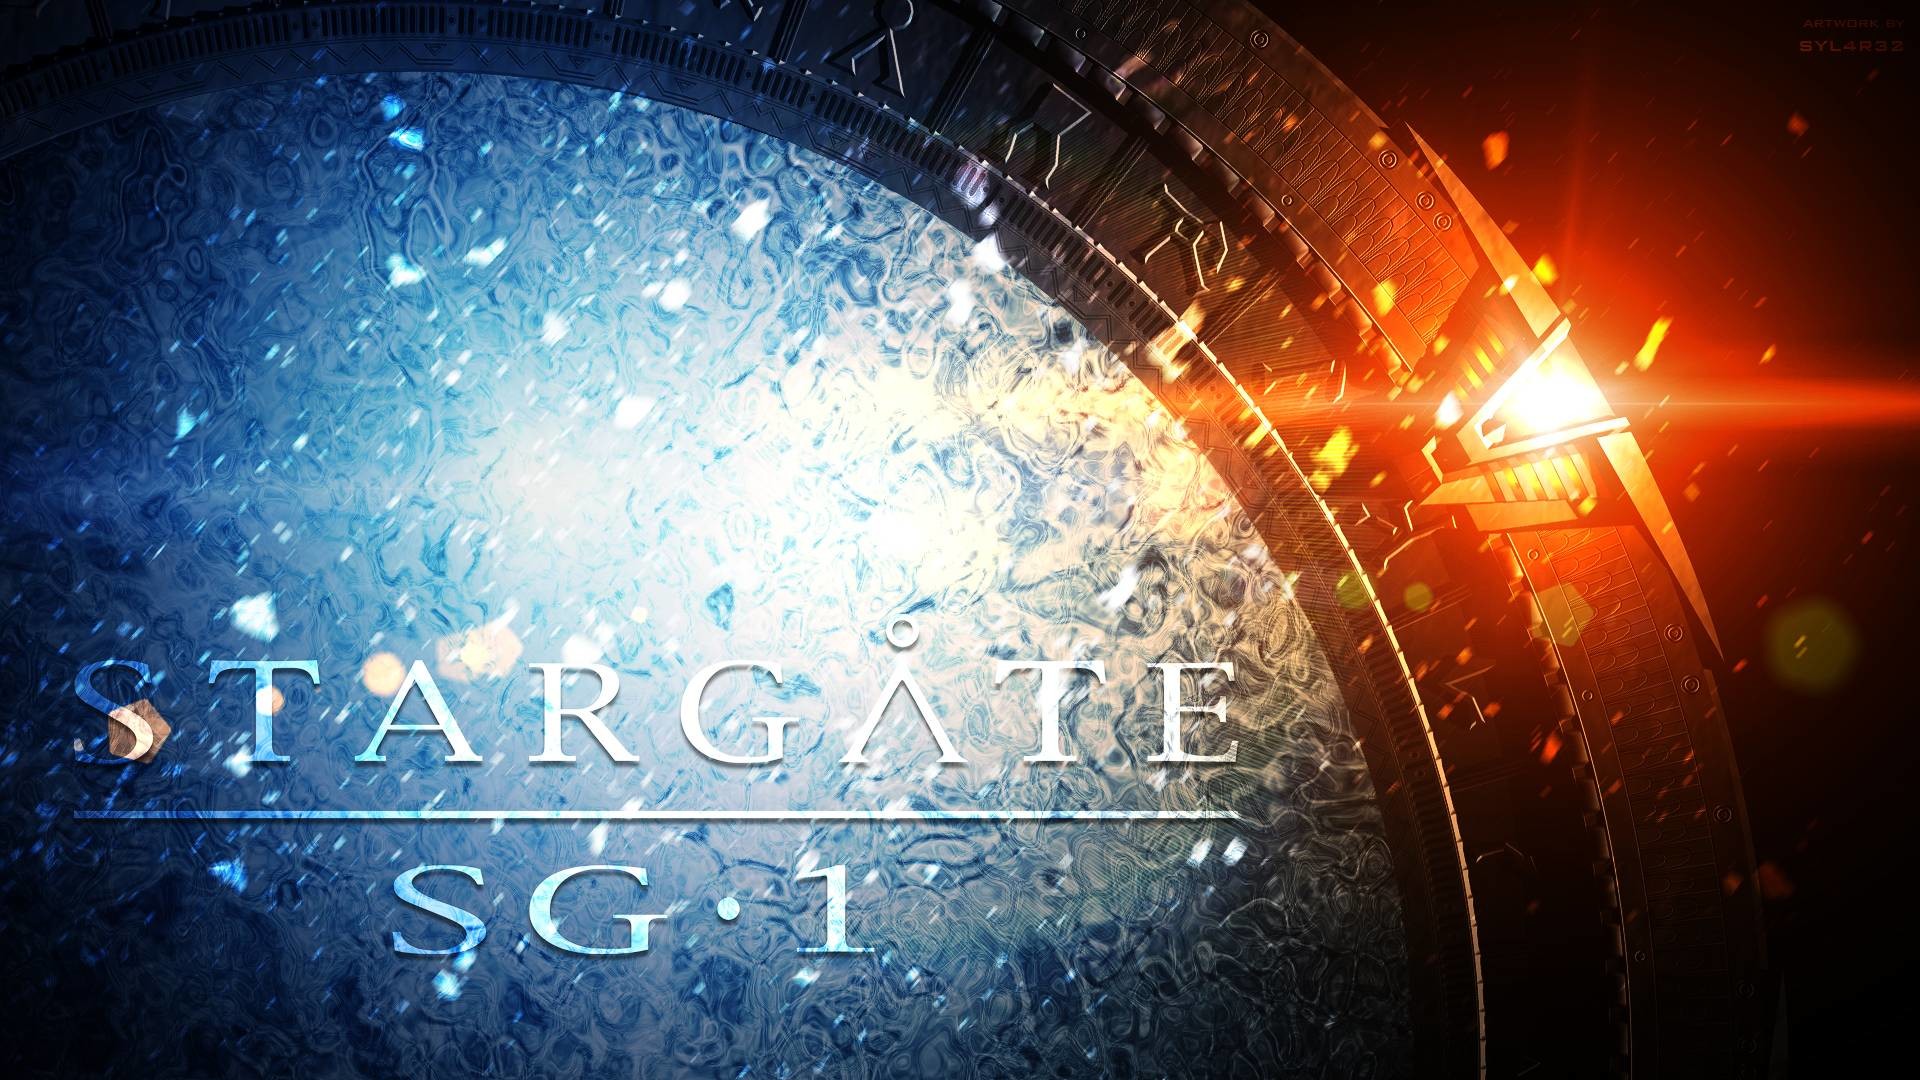 1920x1080 Stargate SG-1 Title Wallpaper (No Logo Version) by SYL4R32 on .